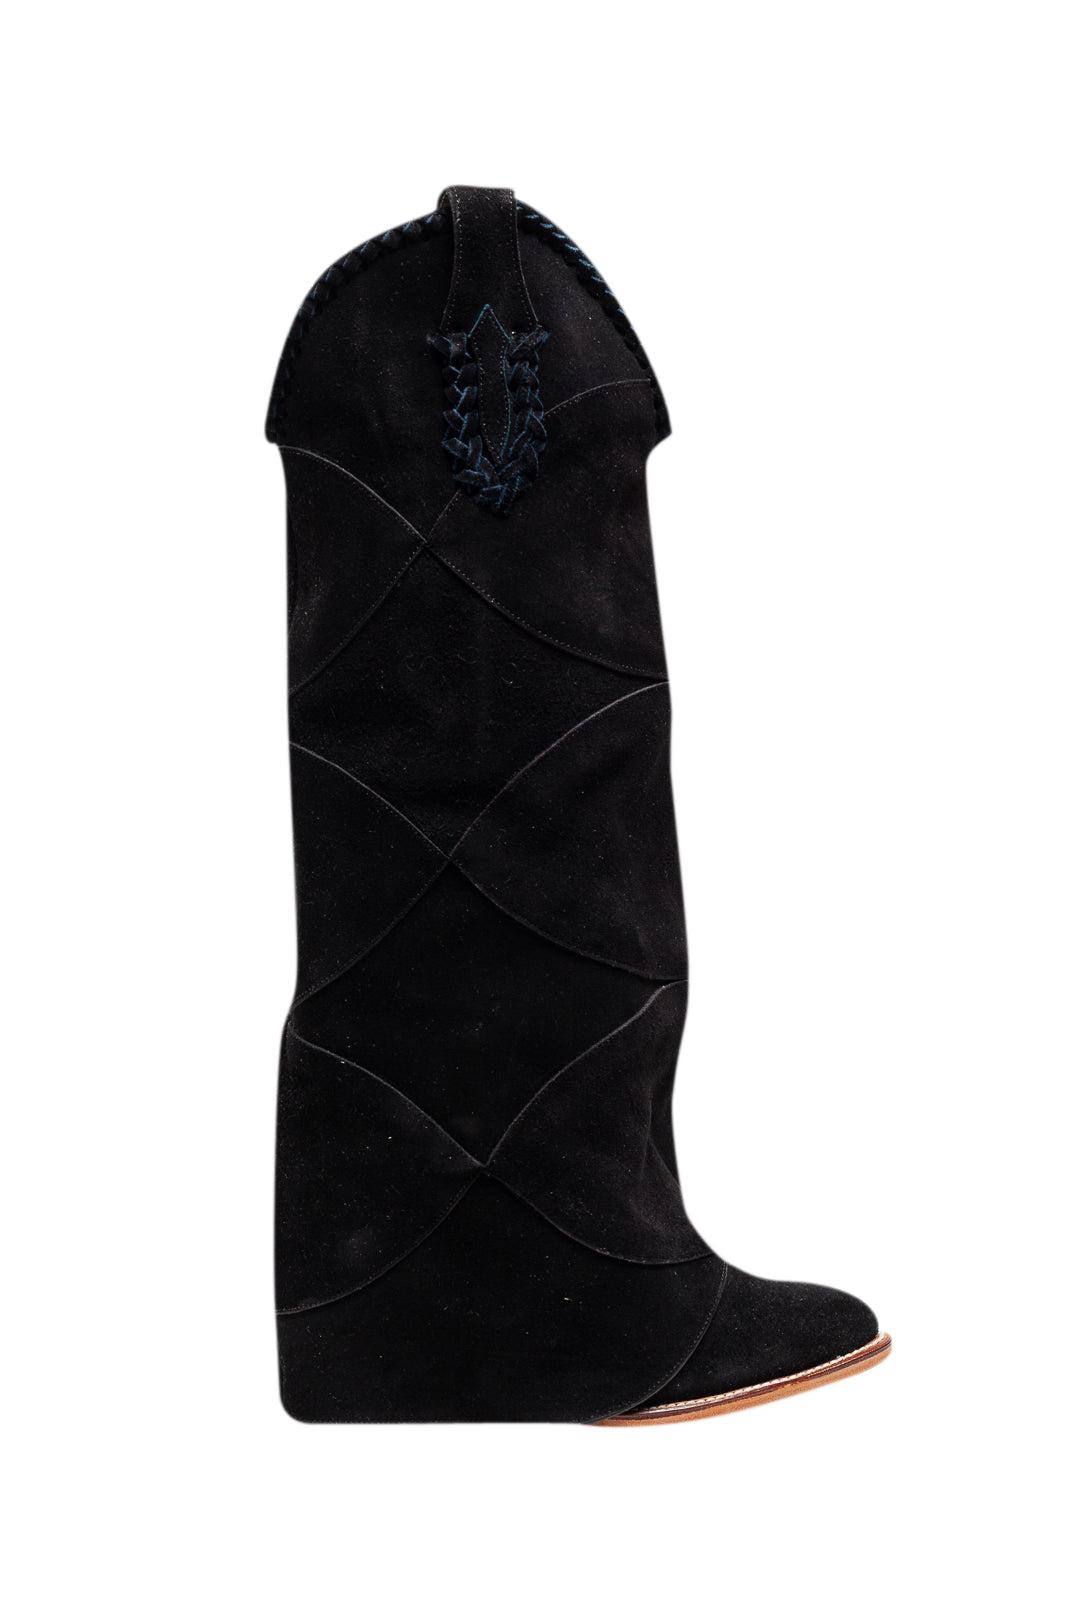 LORENA SARAVIA-Suede leather cowboy boots-dgallerystore